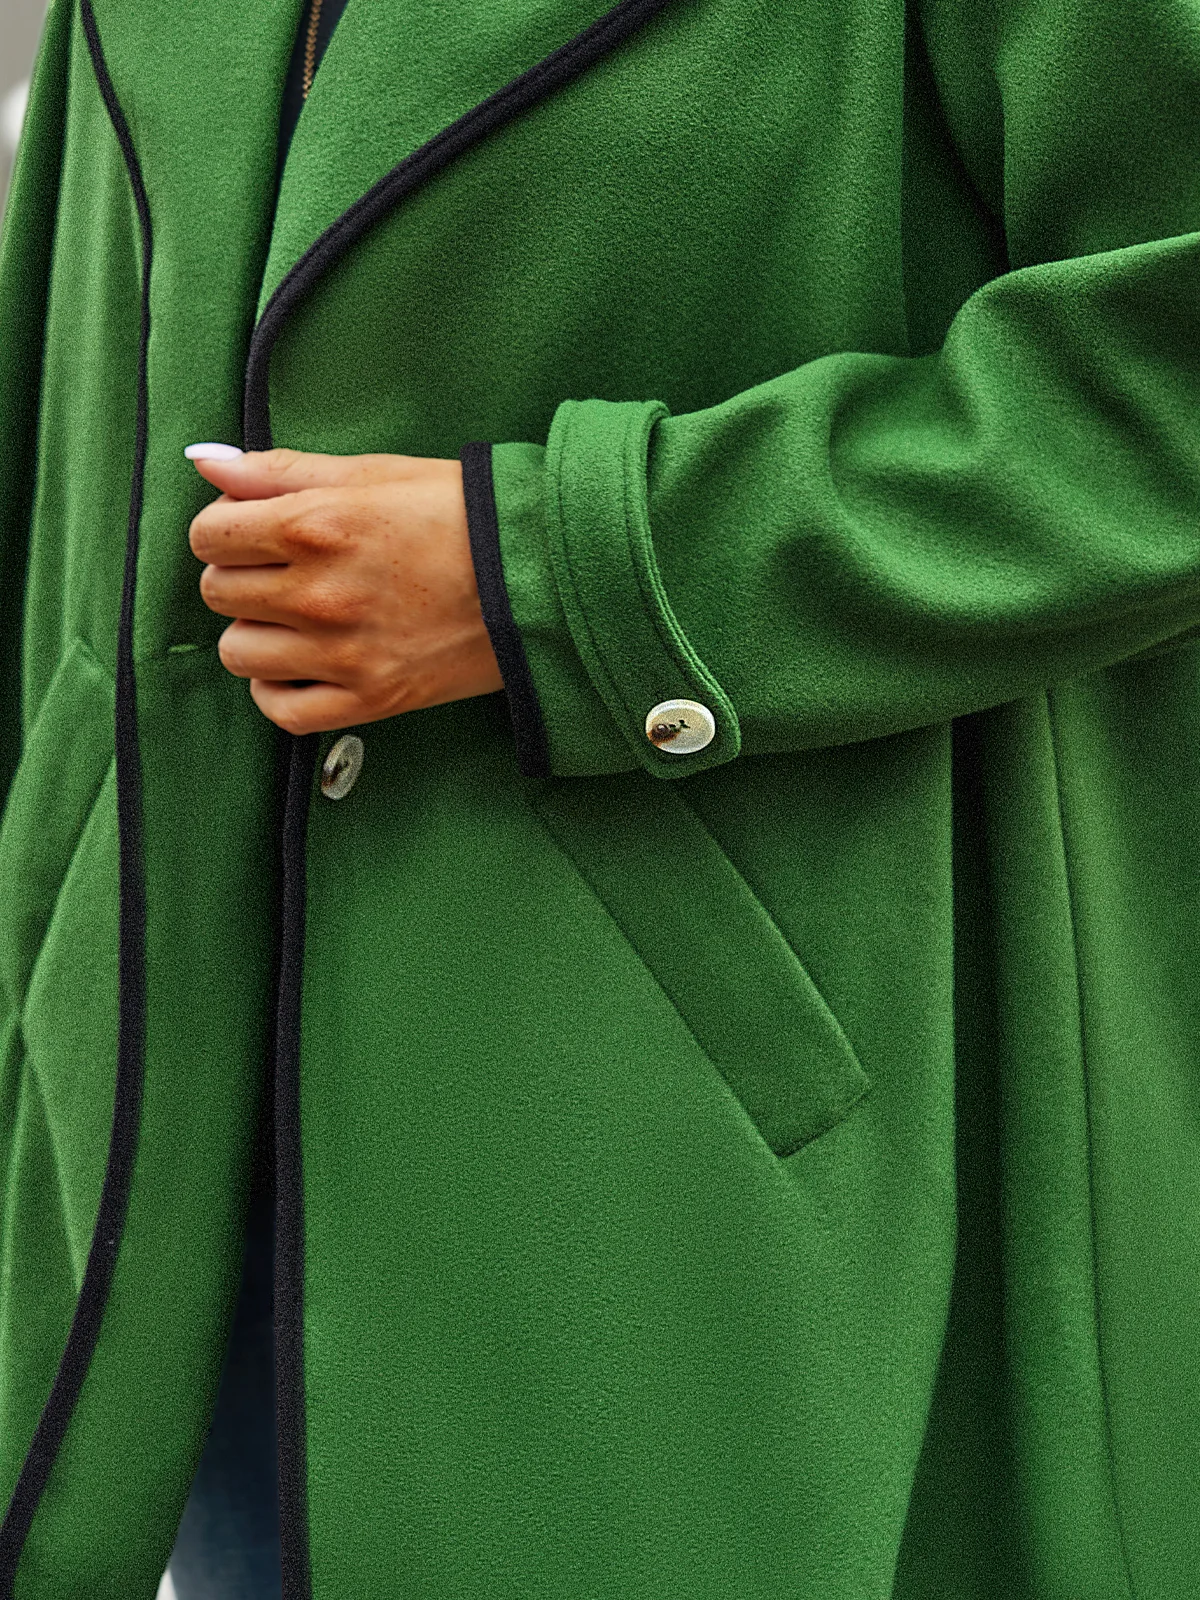 JFN Women Lapel Woolen Cloth Button Long Sleeve Shawl Collar Cardigan Coat	